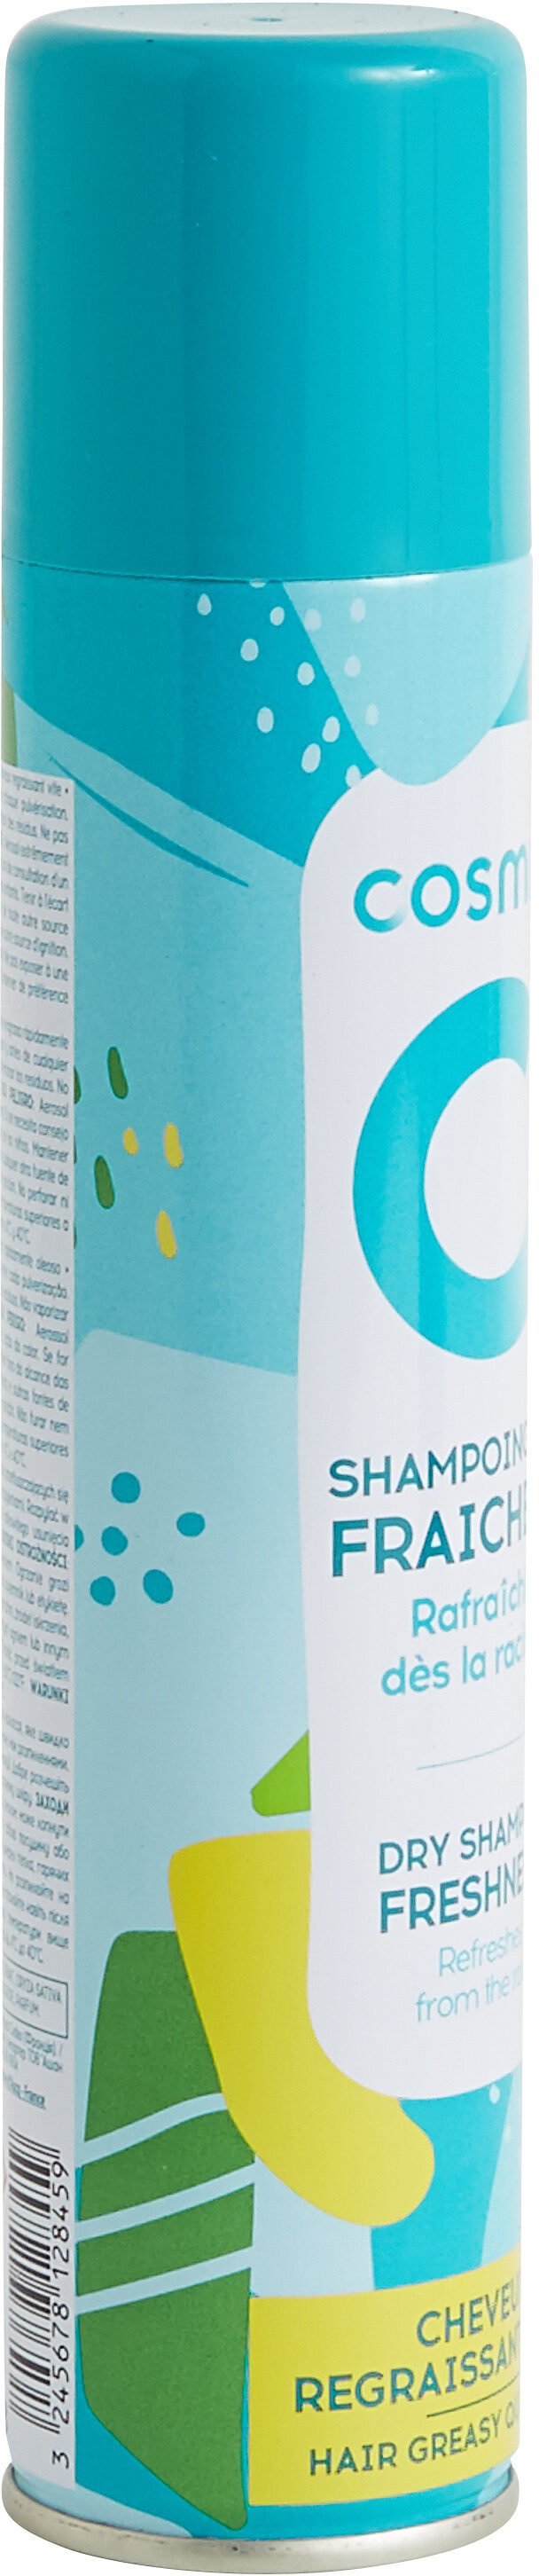 Cosmia - shampoing sec - fraicheur - 200 ml / volume nominal 270ml ? - Produktas - fr